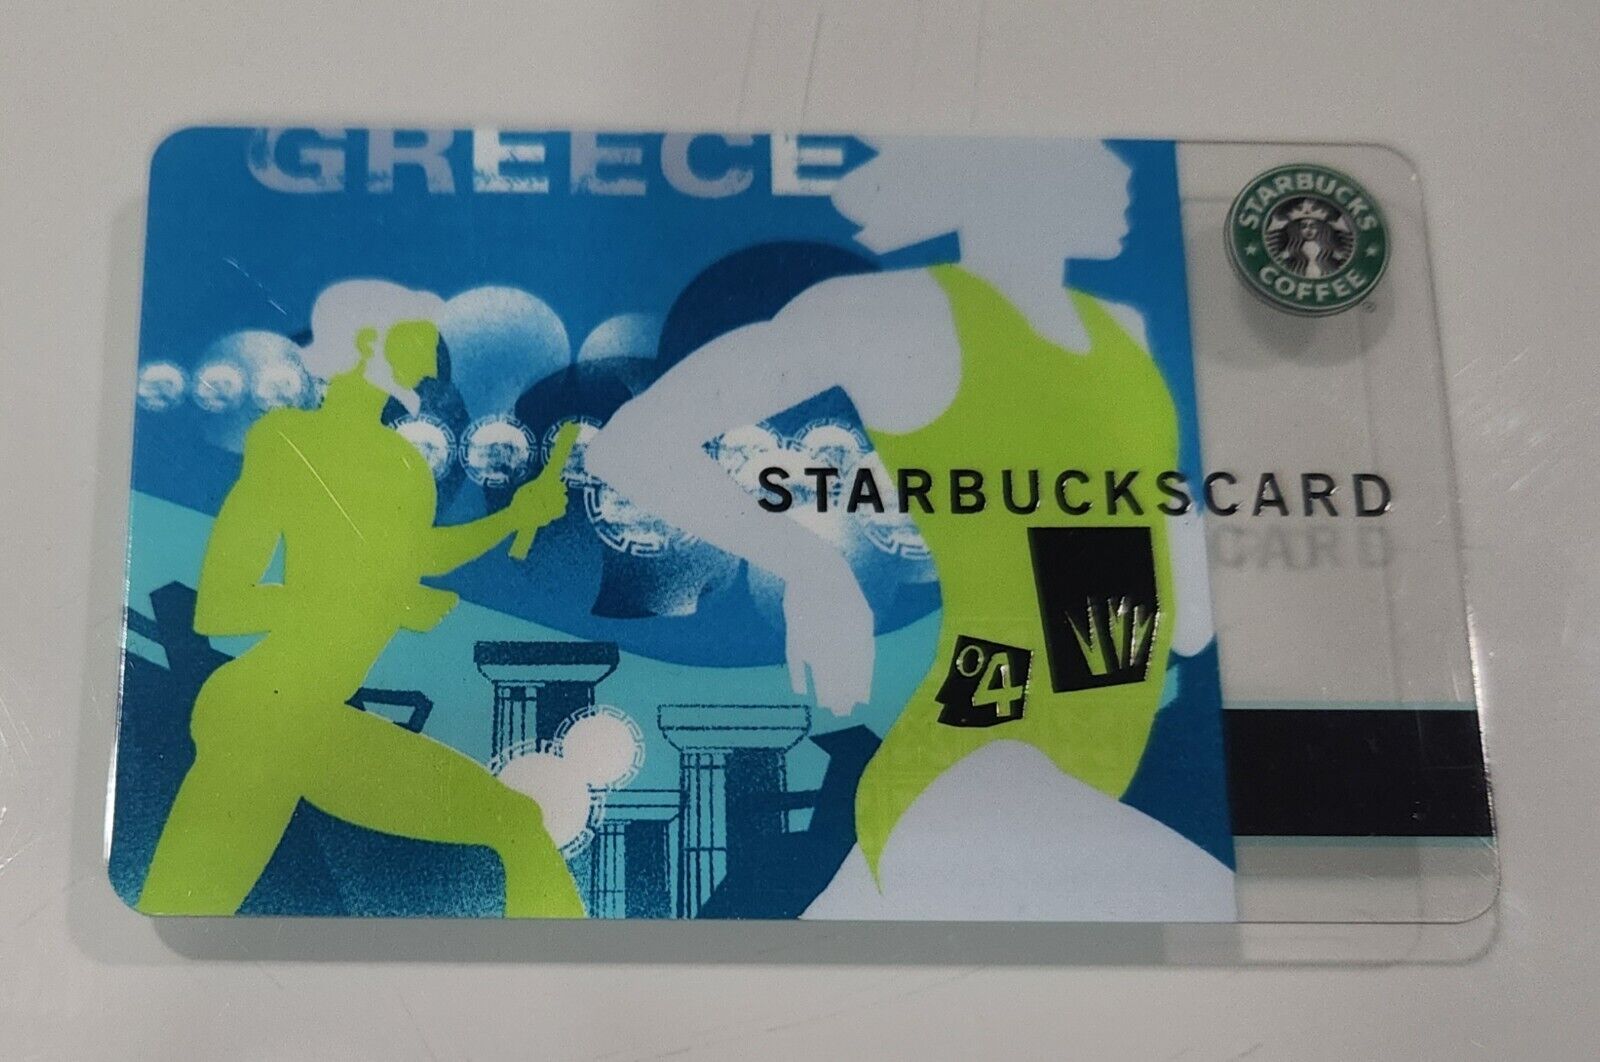 2004 Athens Greece Olympics Starbucks Gift Card - Unused - No Value